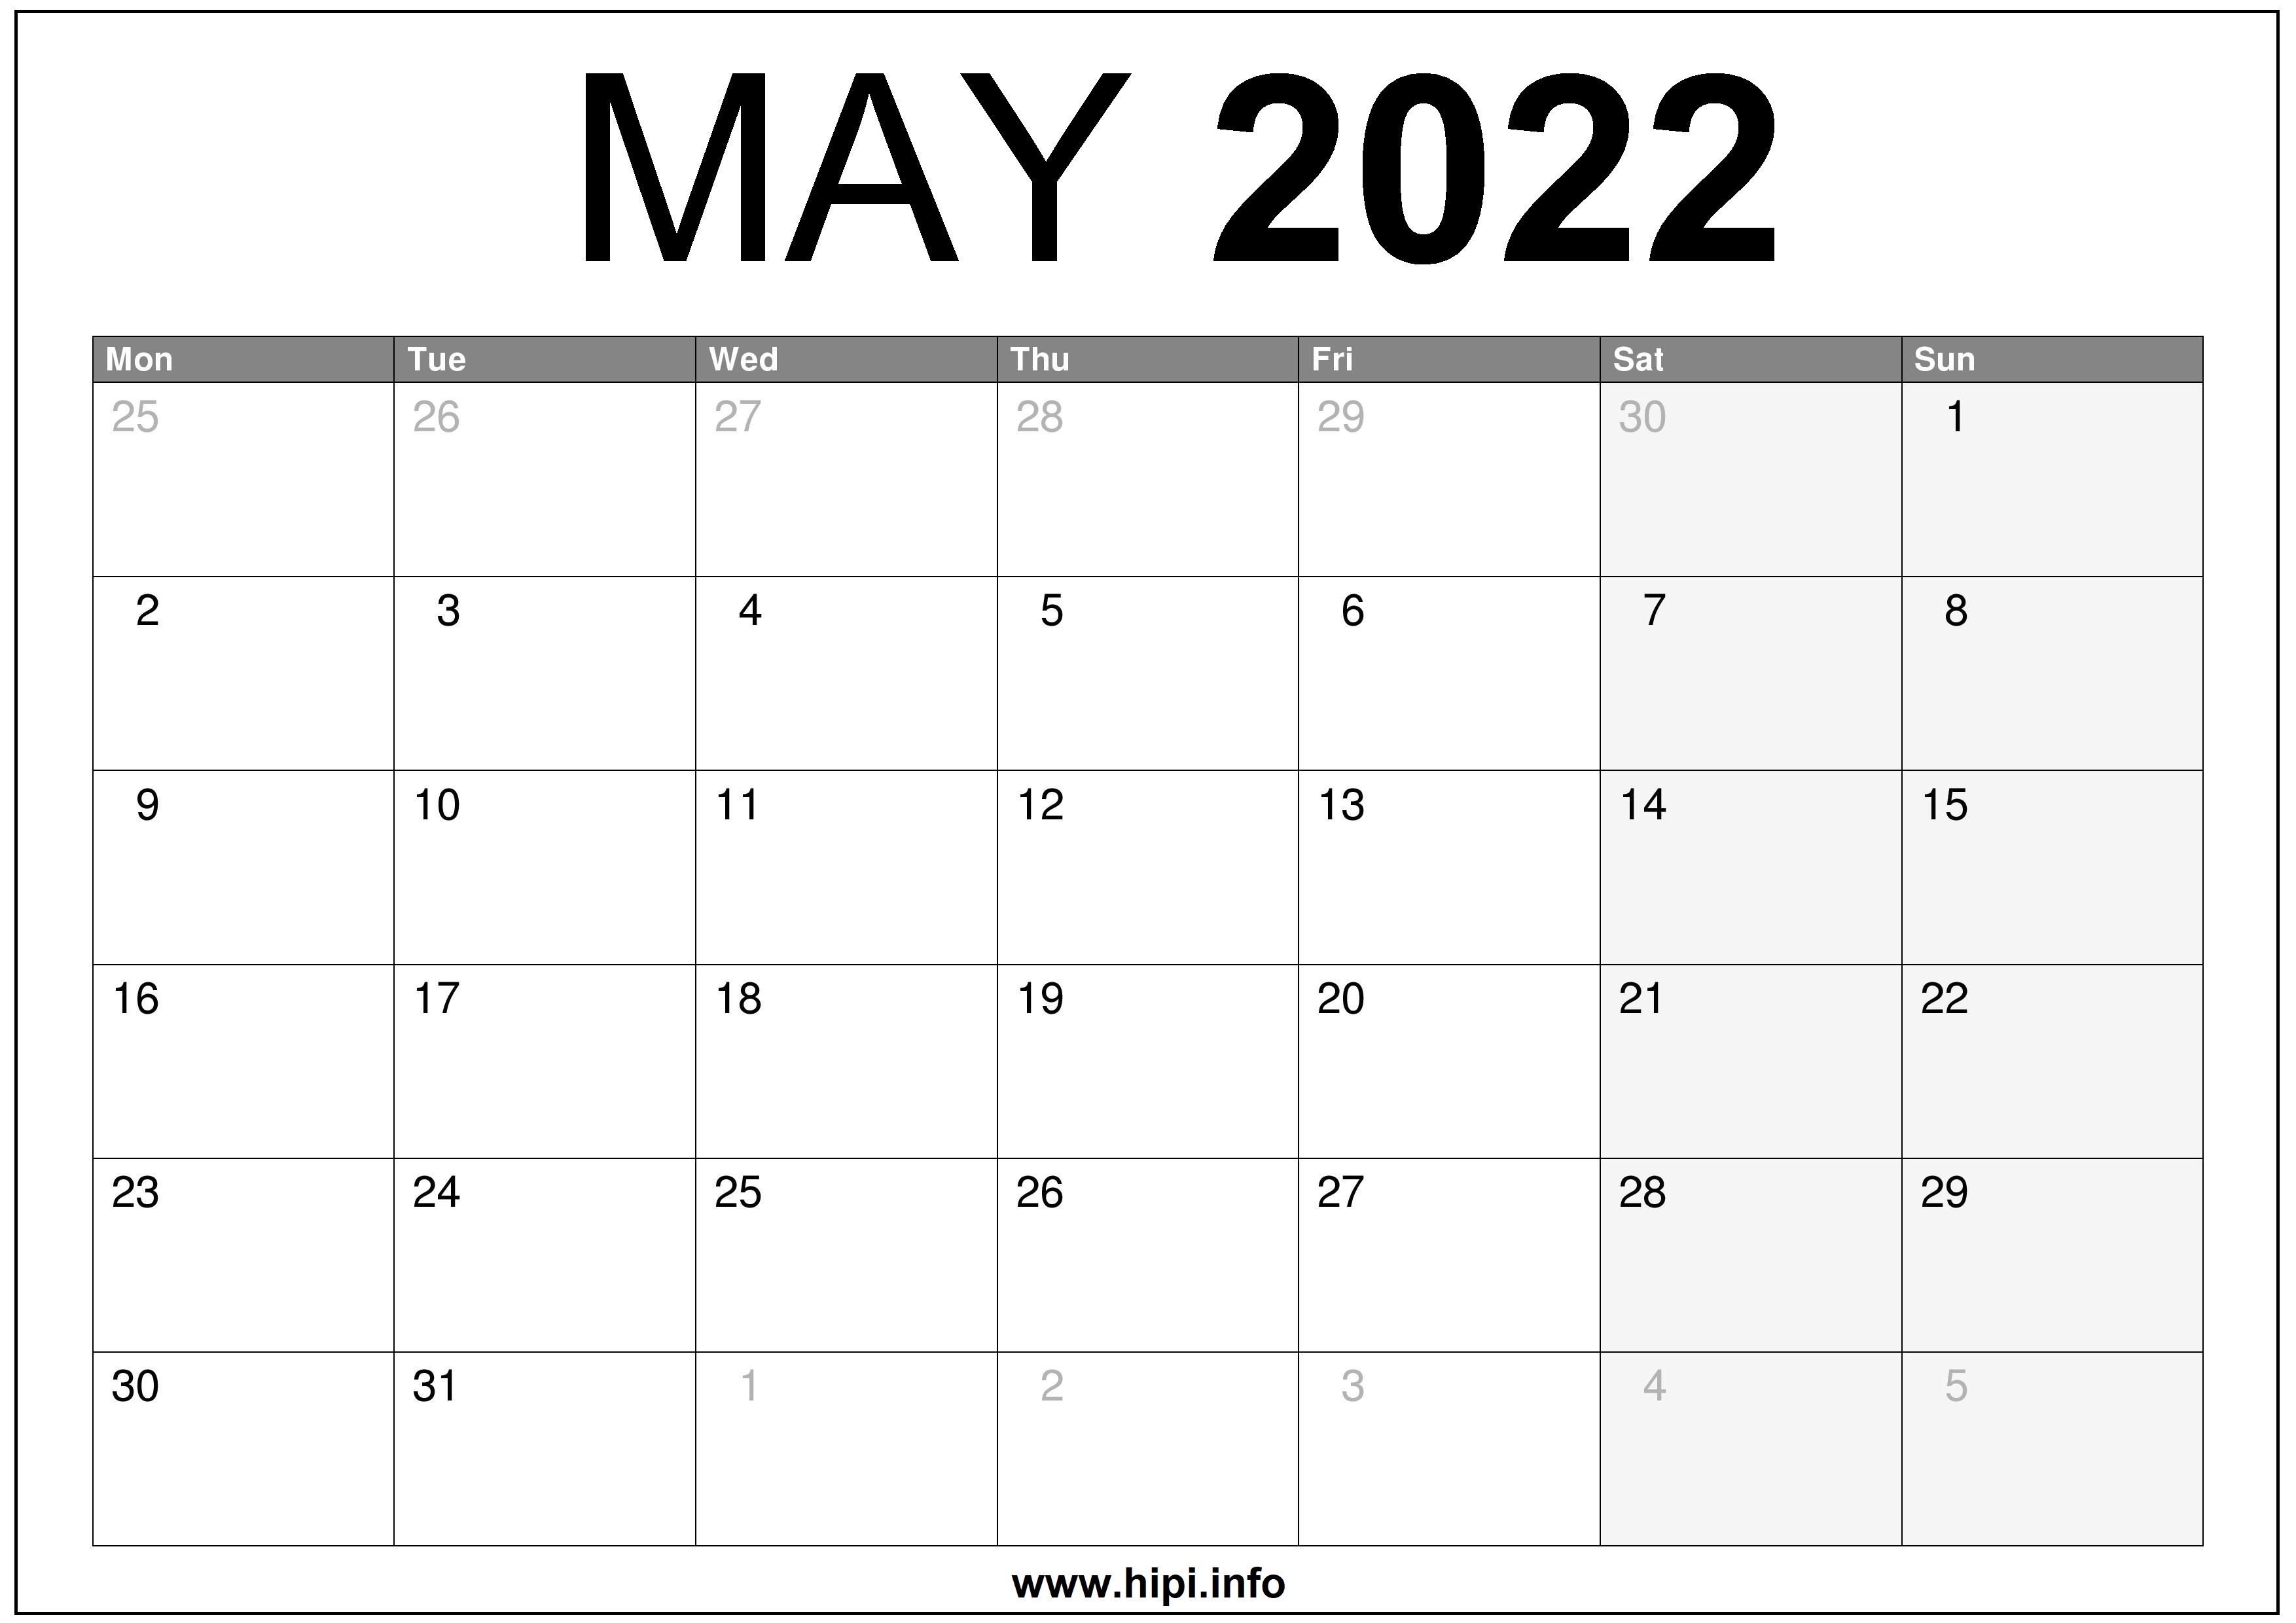 May 2022 Uk Calendar Printable Free - Hipi.info | Calendars Printable Free